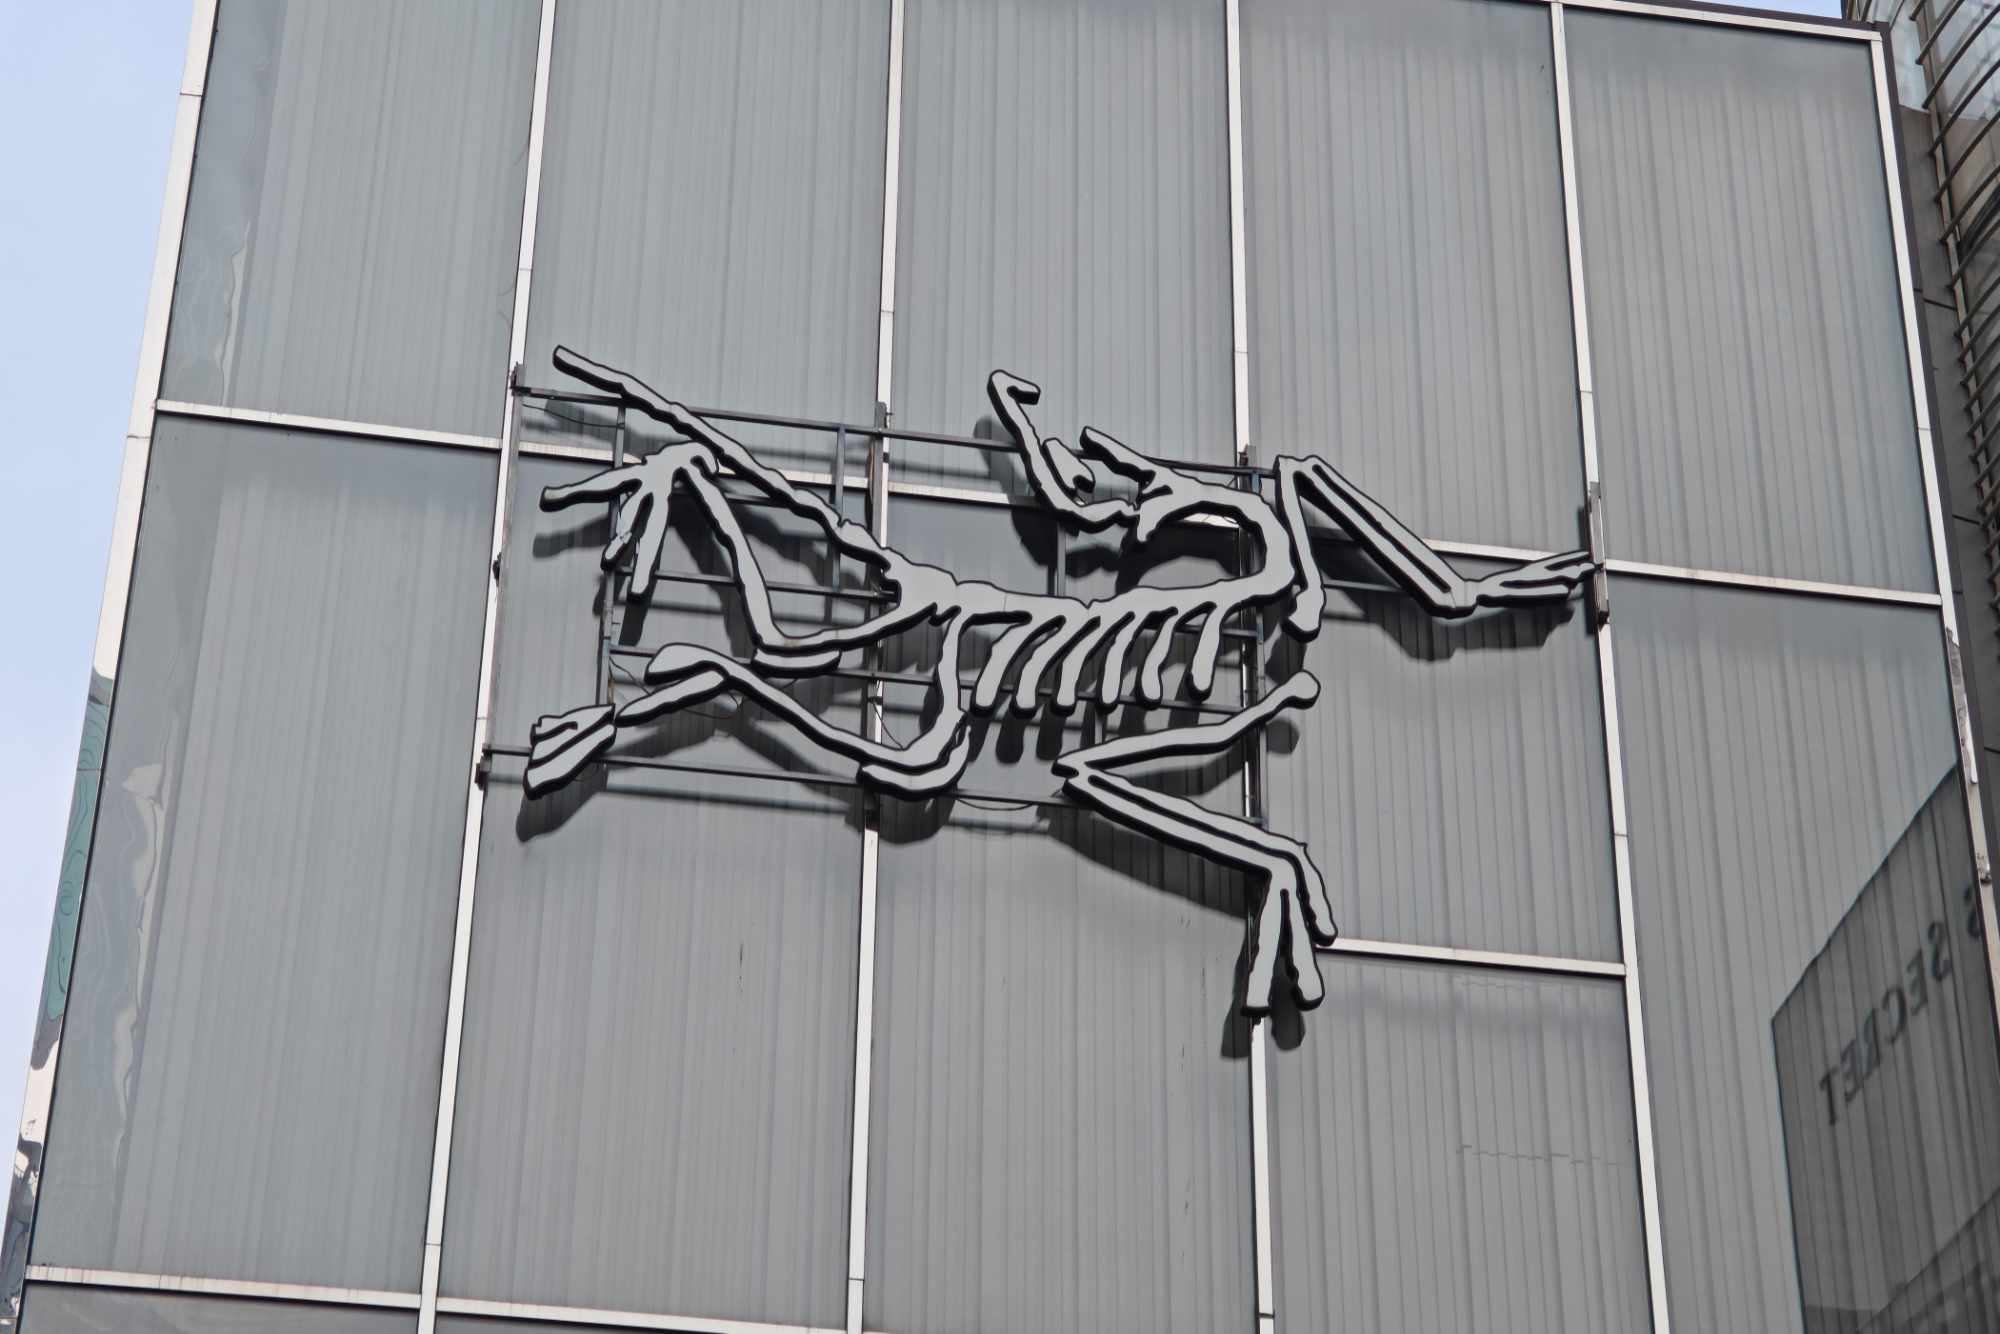 Arcteryx's logo on a store in Shanghai